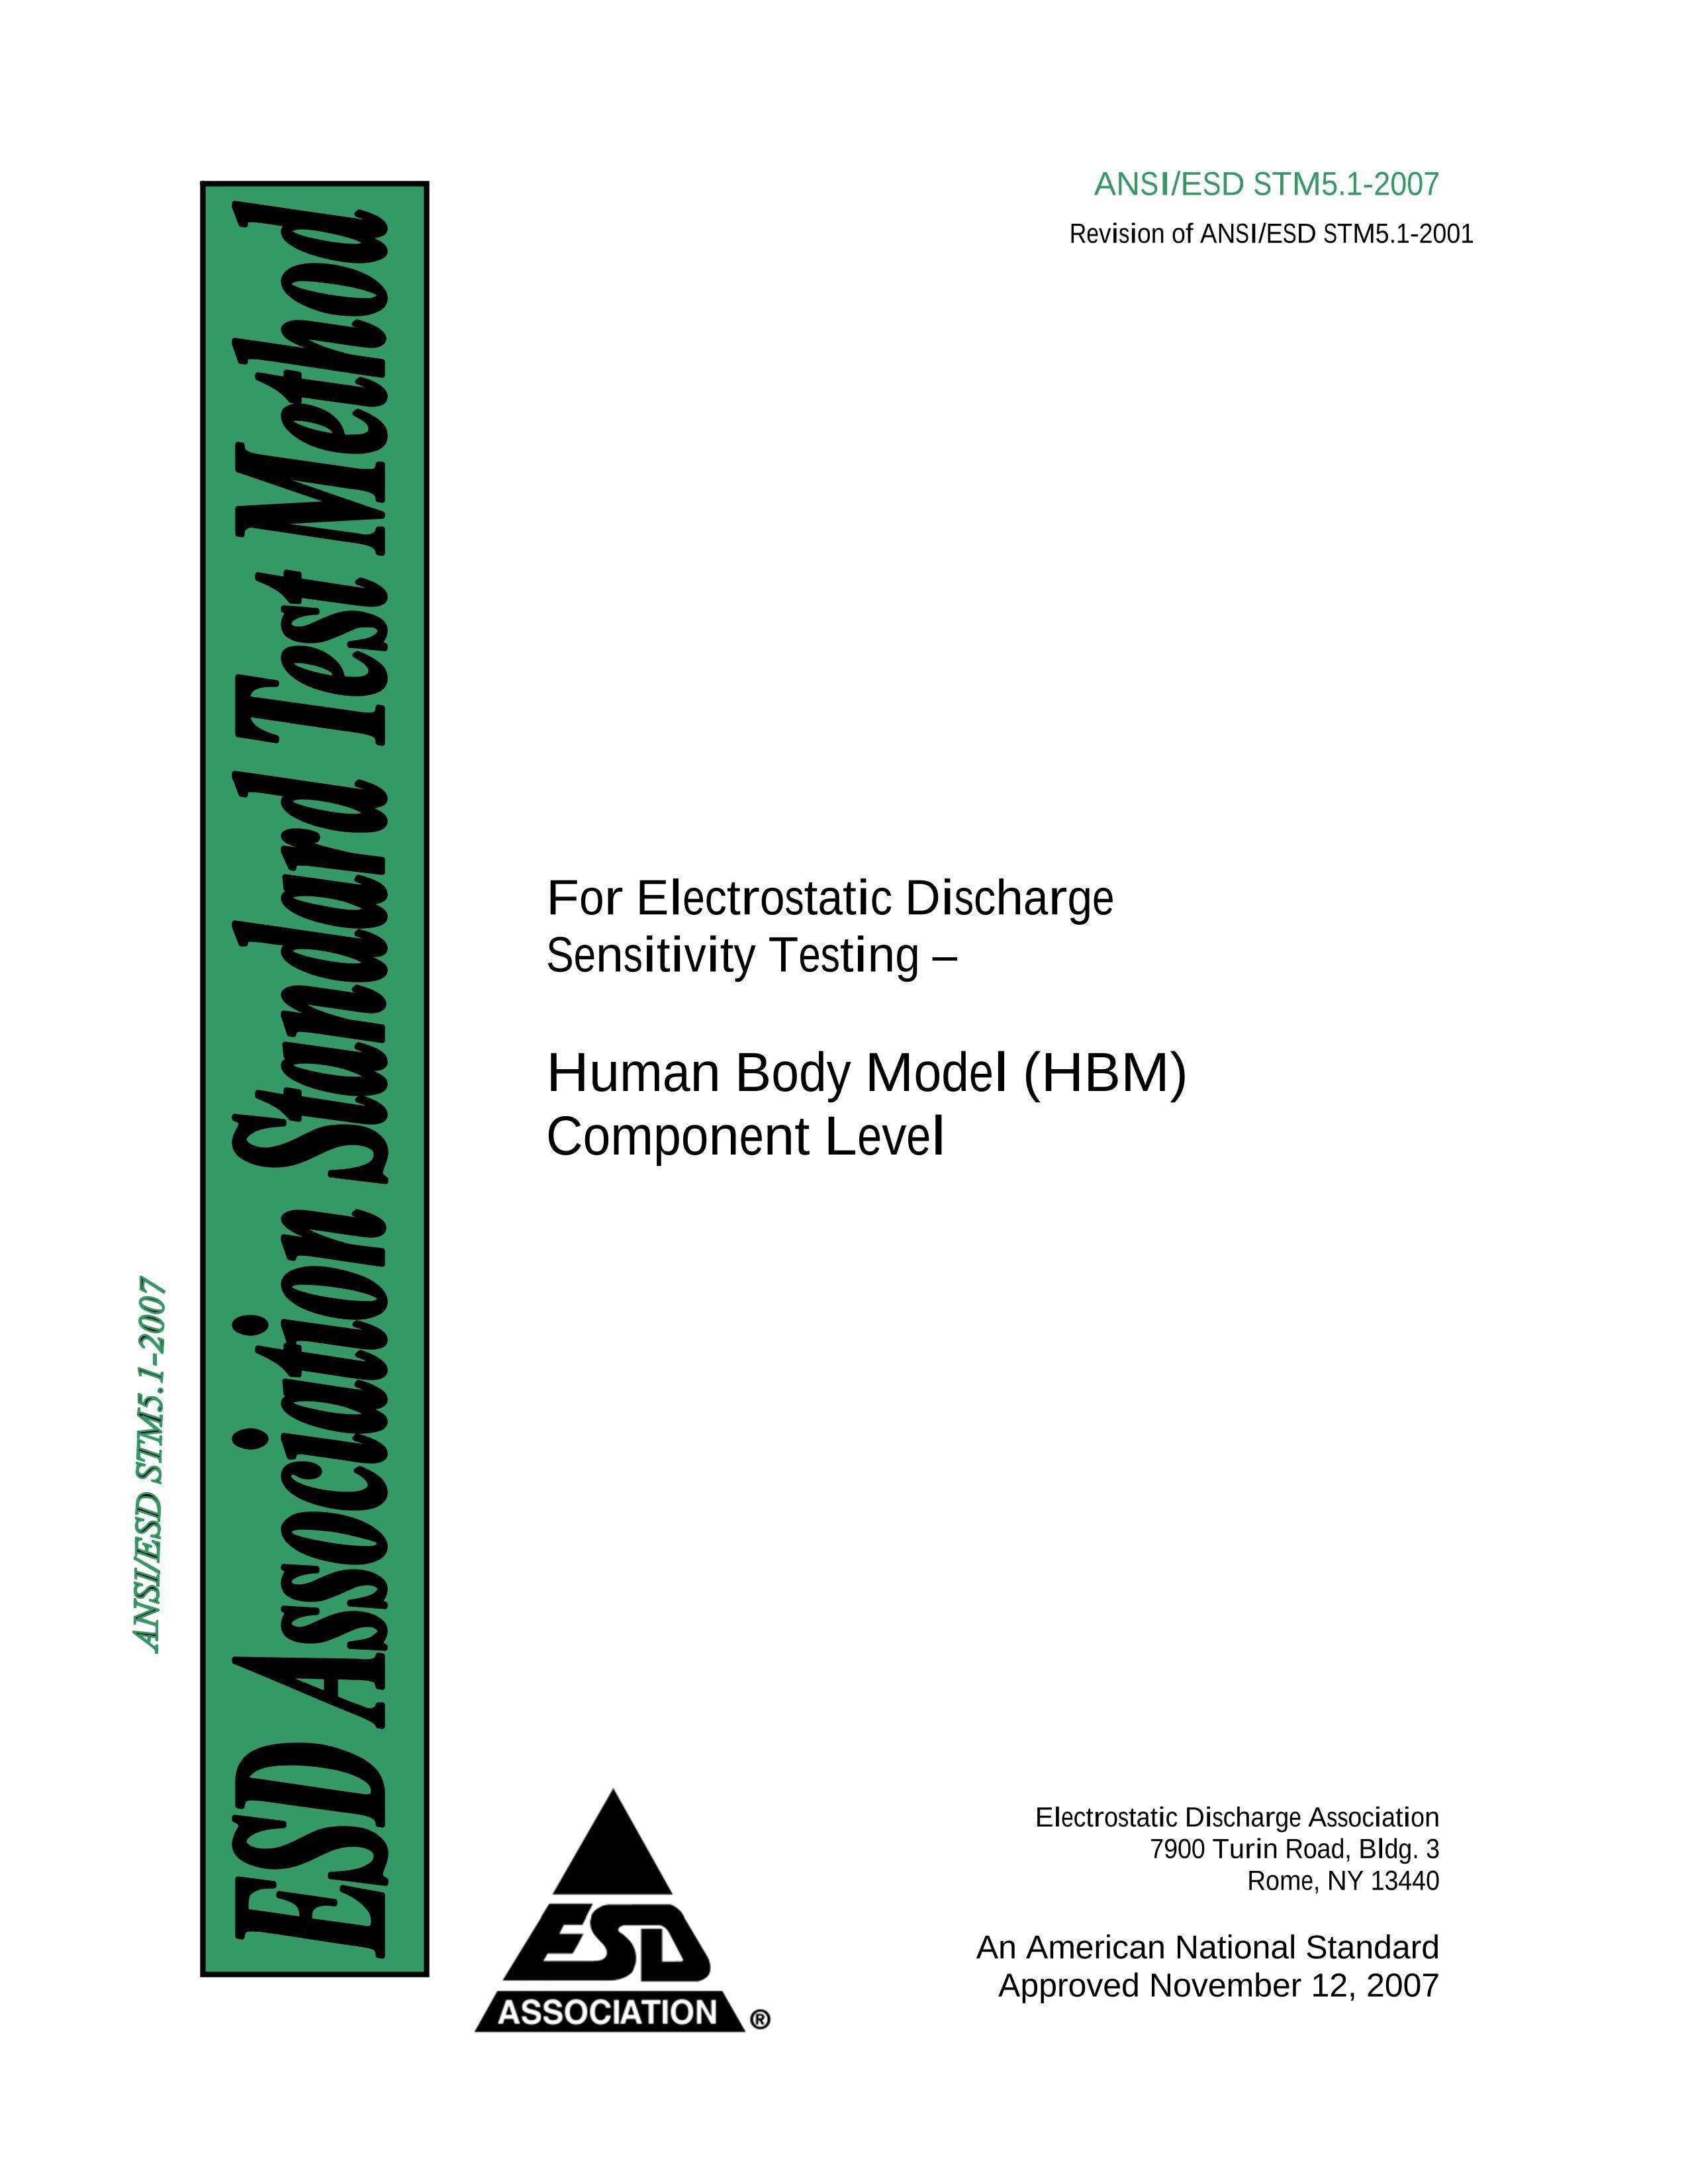 ANSI-ESD STM5.1-2007 For Electrostatic Discharge Sensitivity Testing CHuman Body Model(HBM) Component Level.pdf1ҳ